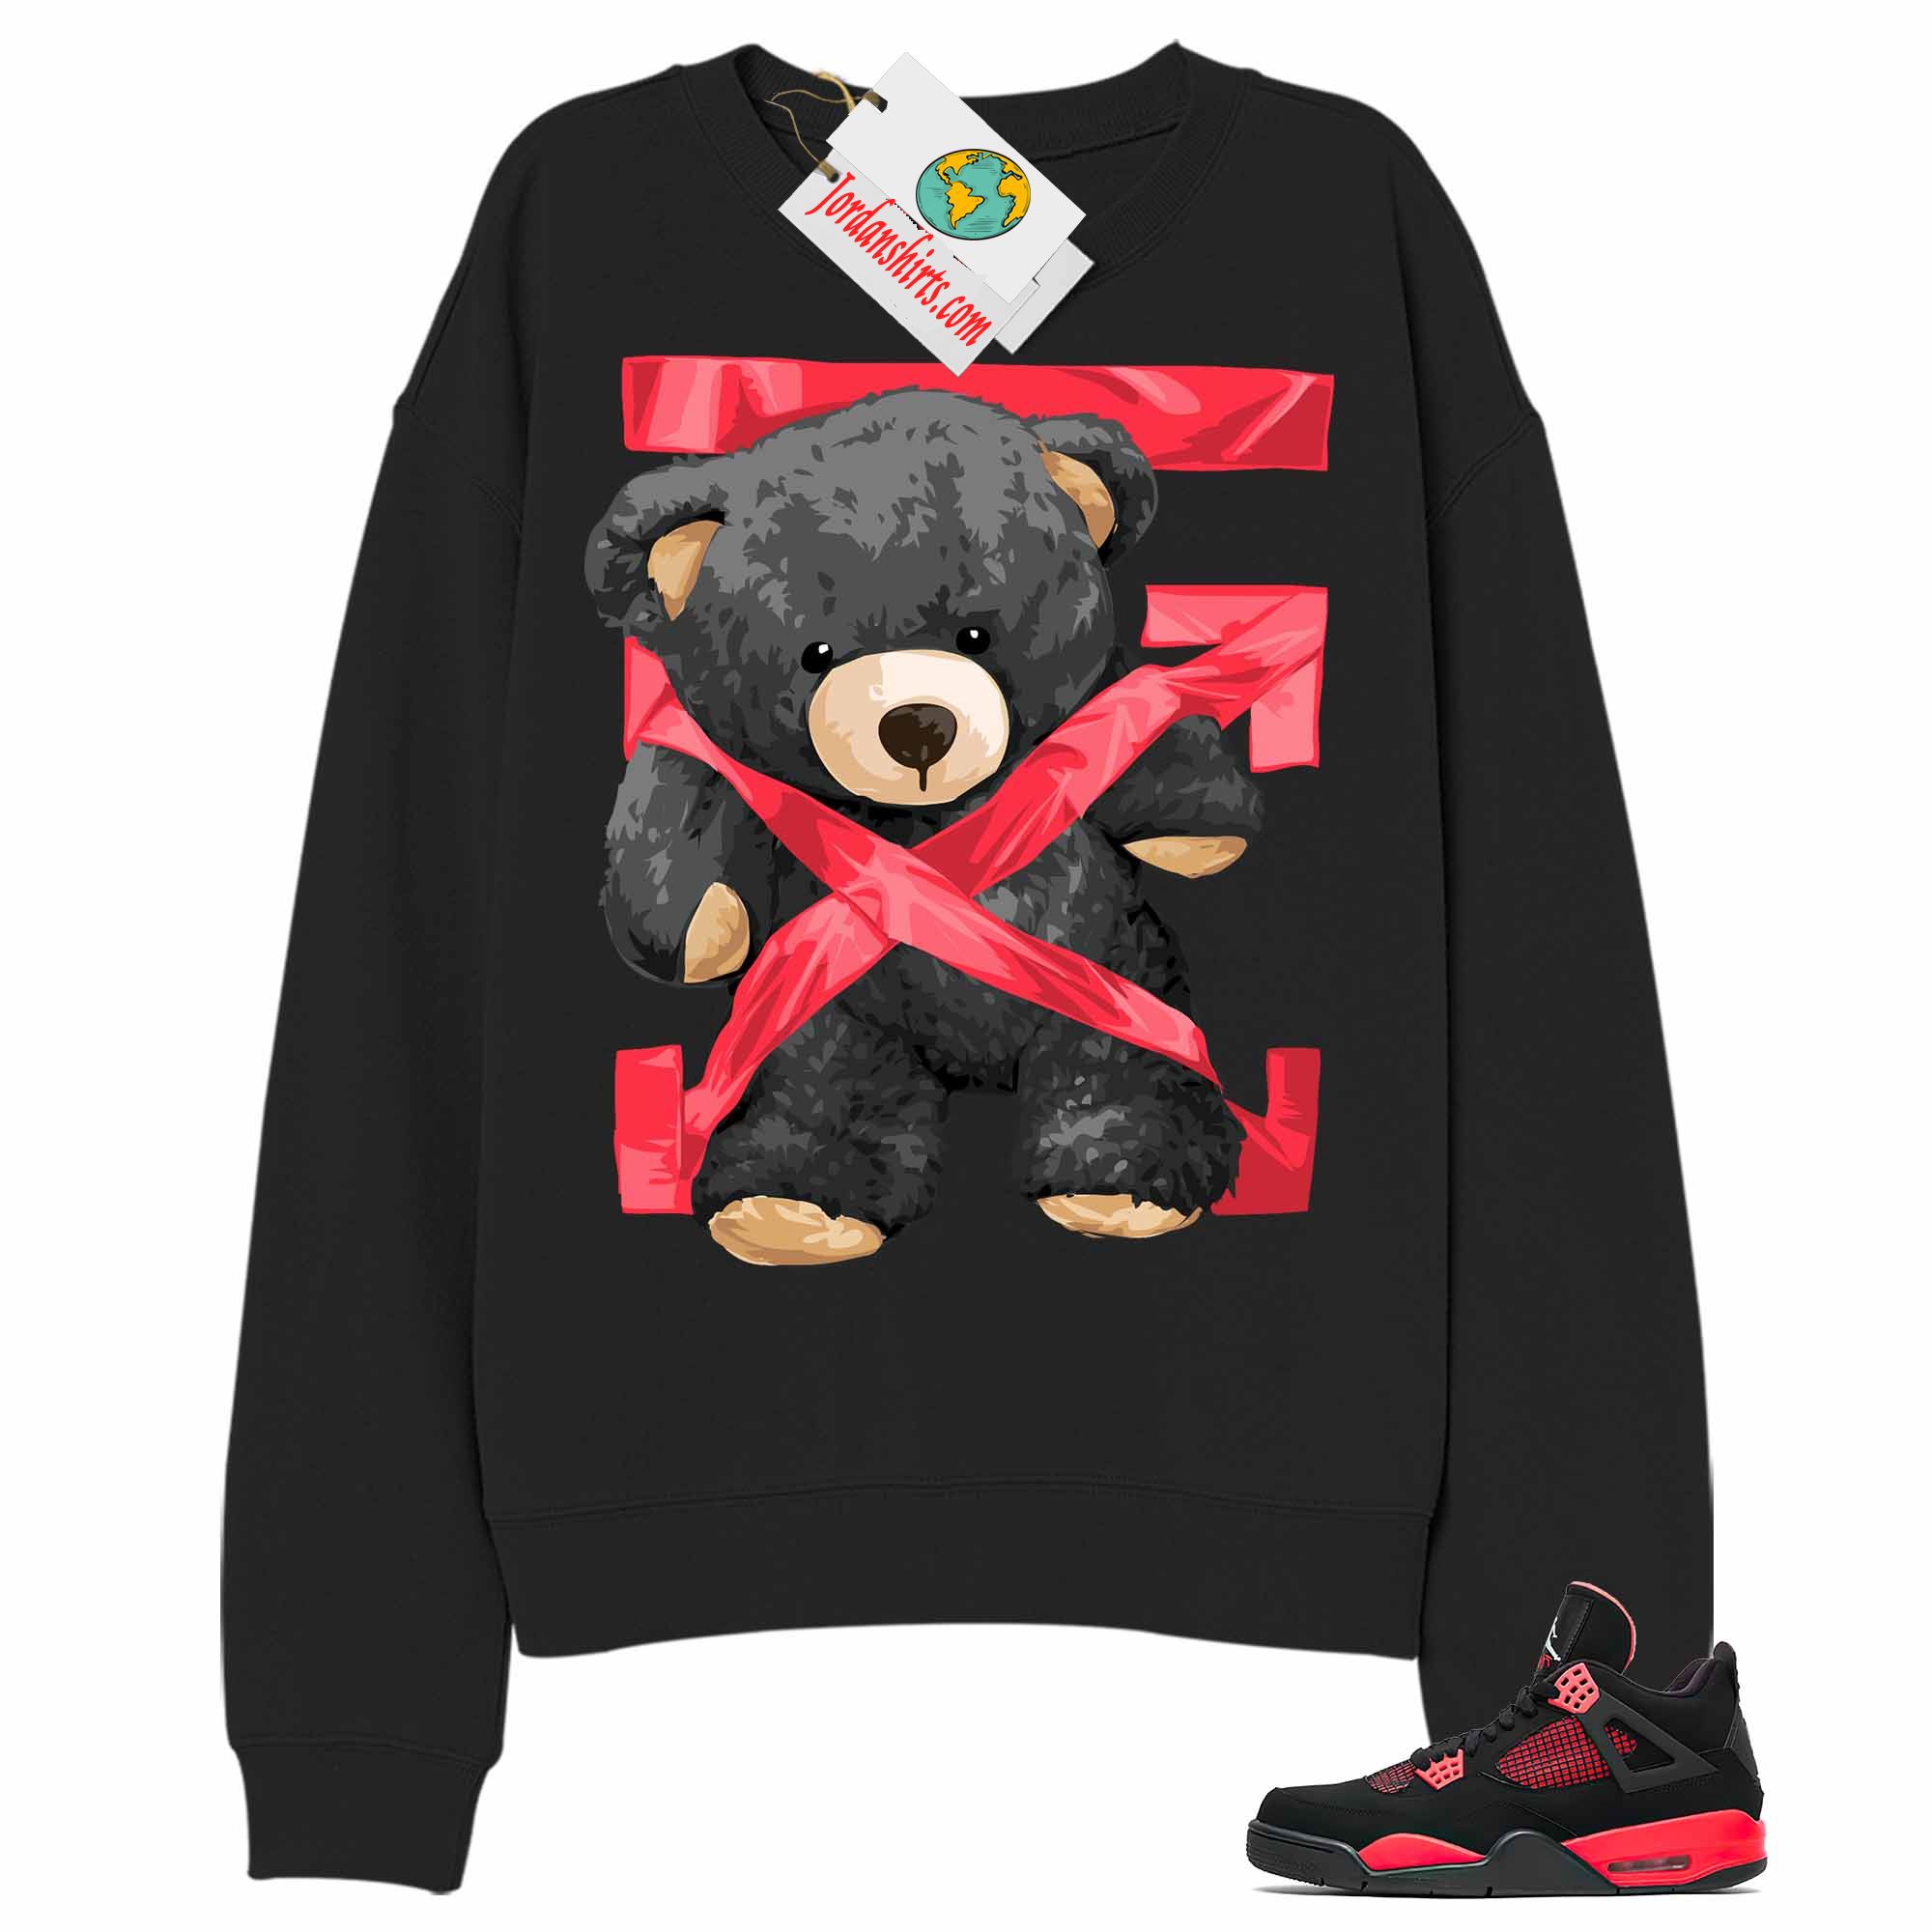 Jordan 4 Sweatshirt, Teddy Bear Duck Tape Black Sweatshirt Air Jordan 4 Red Thunder 4s Full Size Up To 5xl